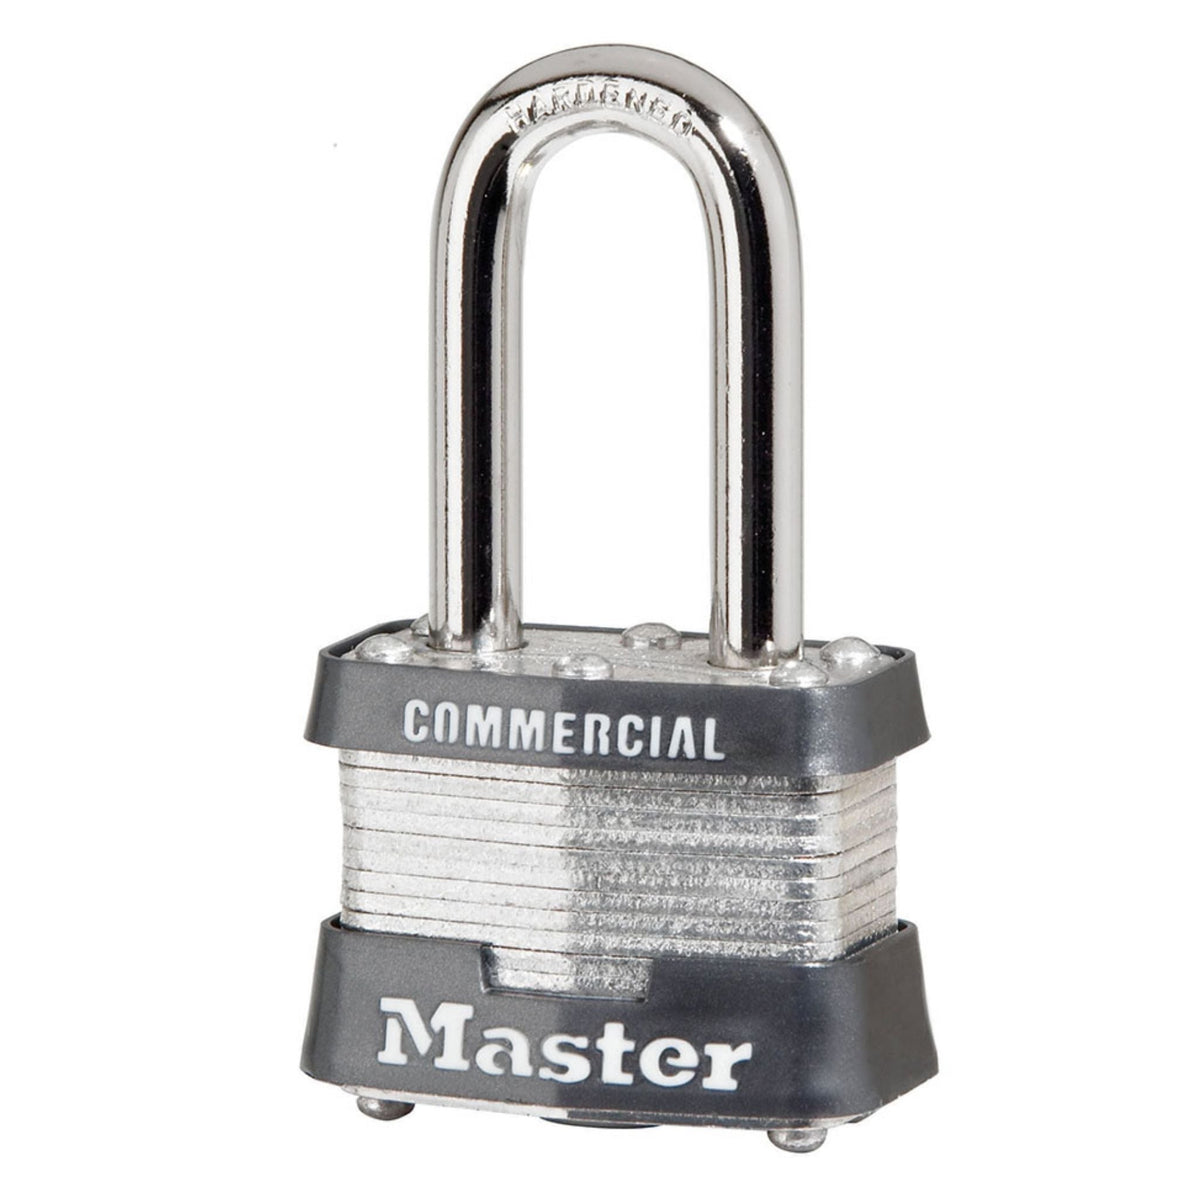 Master Lock 3KALF 3605 Laminated Steel Locks Keyed Alike to Match Key Number KA3605 with 1.5-Inch Shackle - The Lock Source